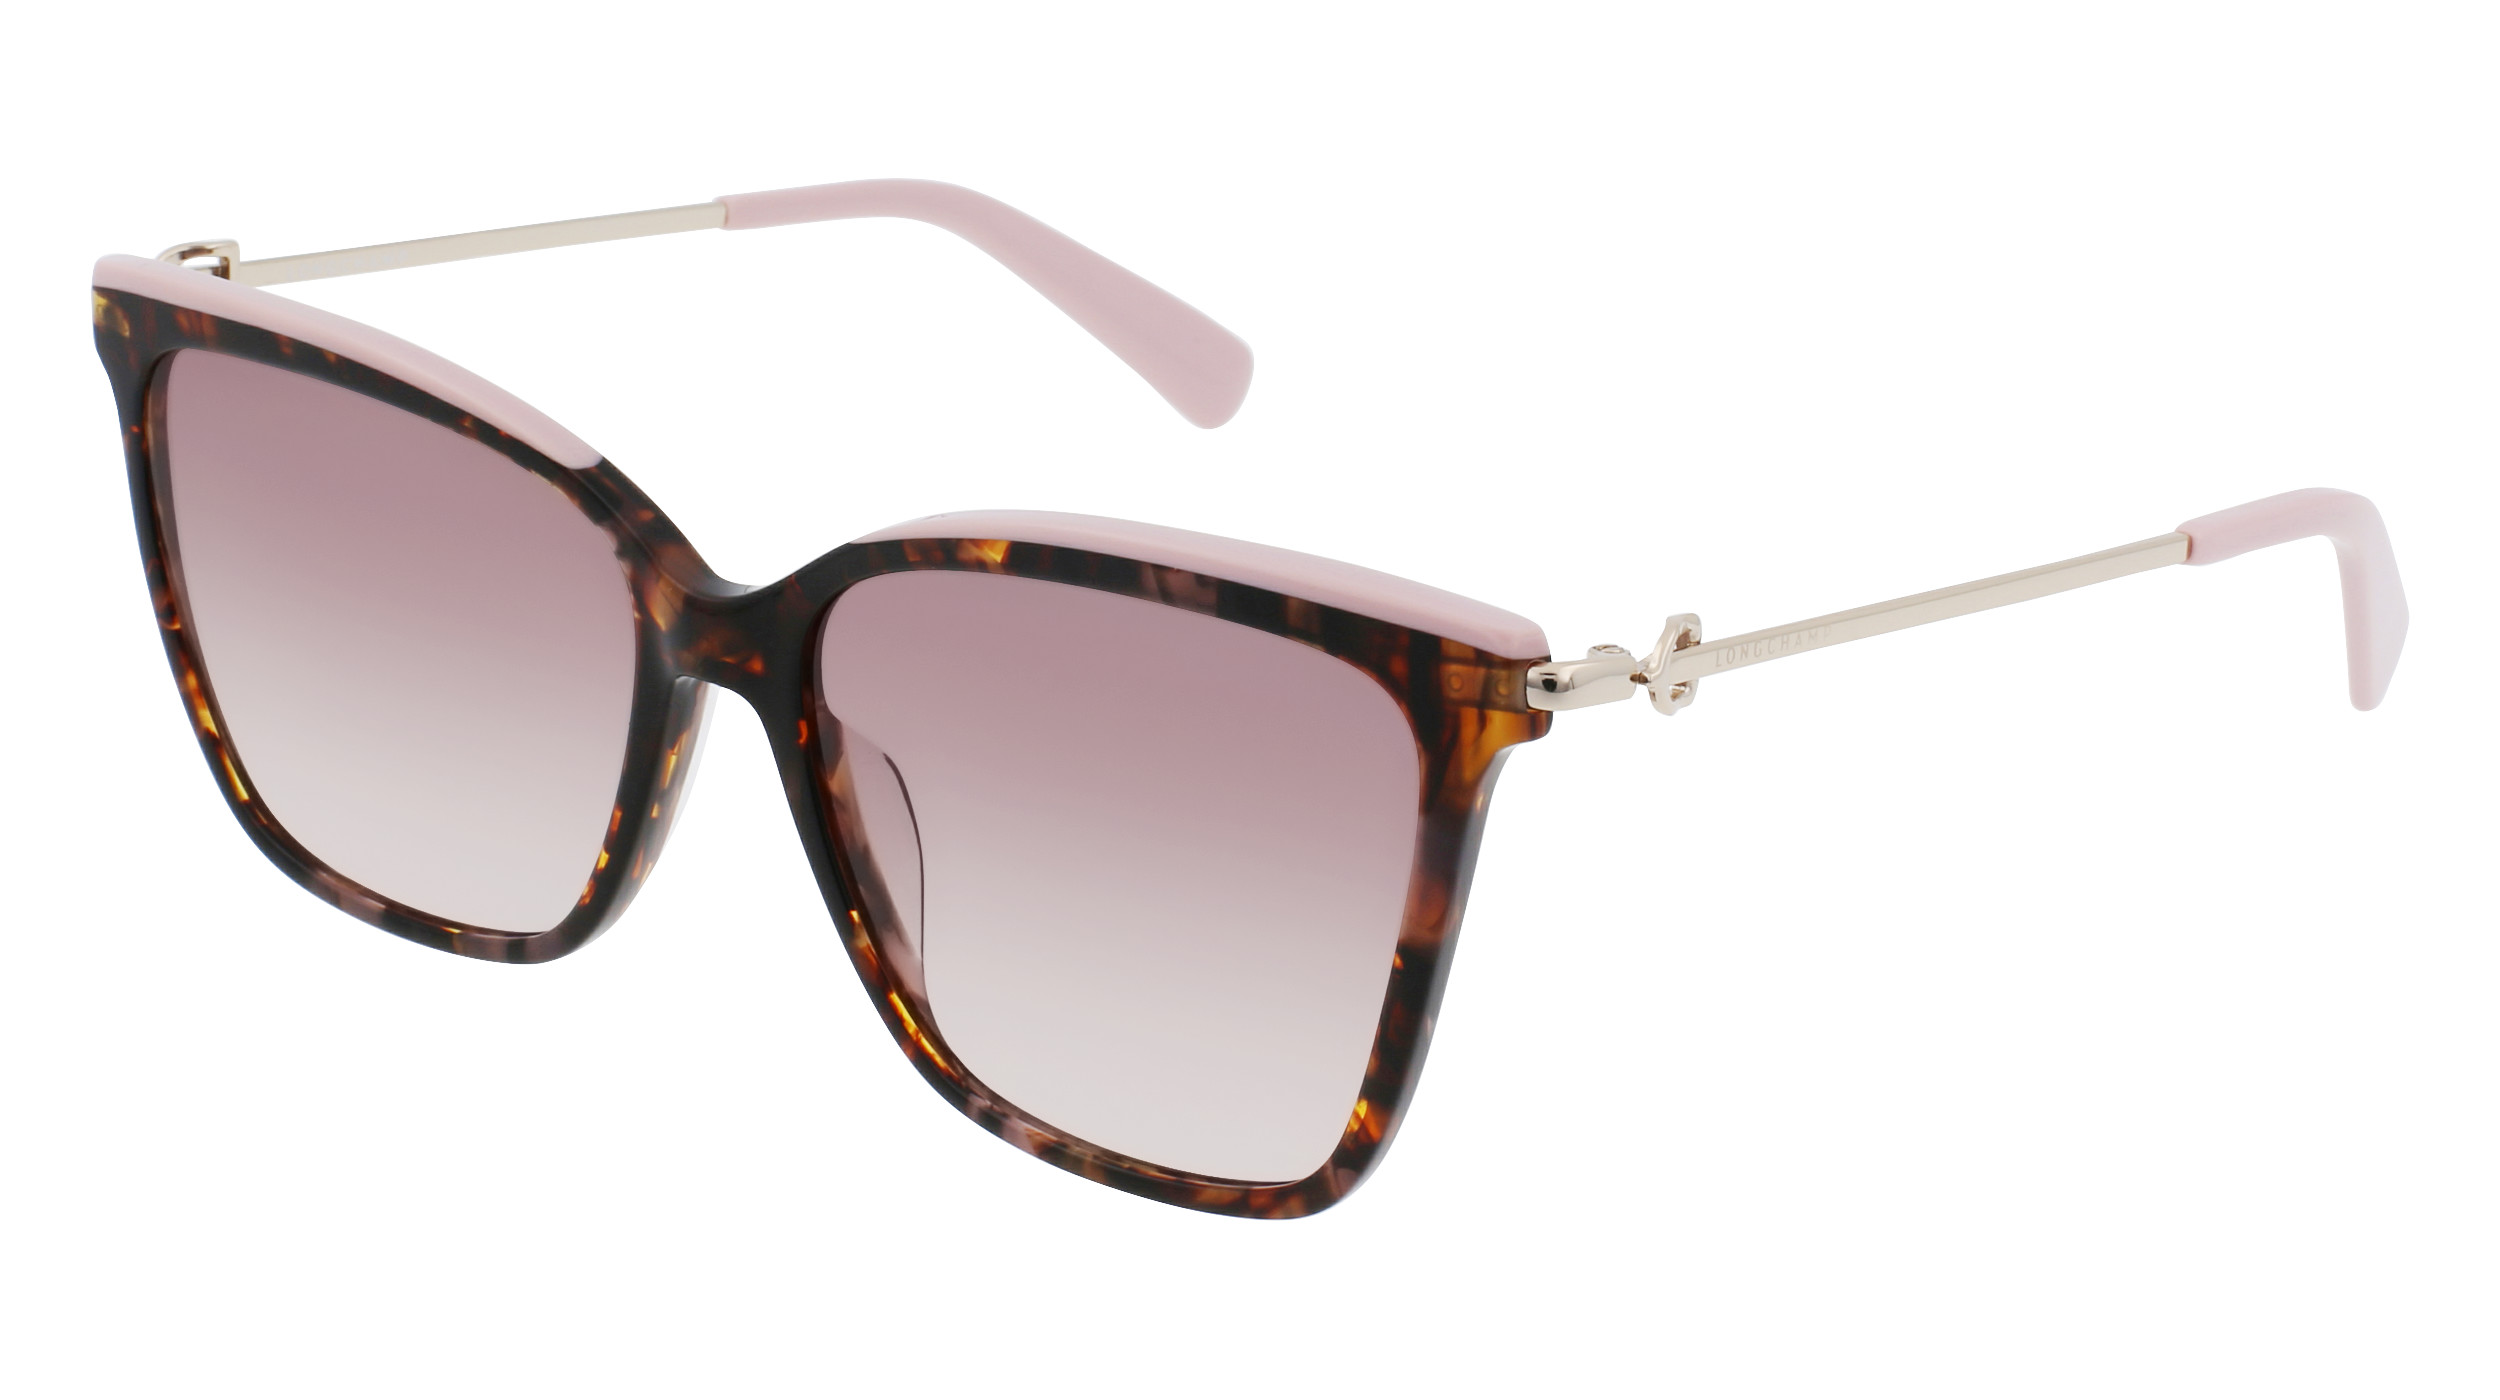 Longchamp Tart Rims And Pink Designed Sunglasses By G&M Eyecare